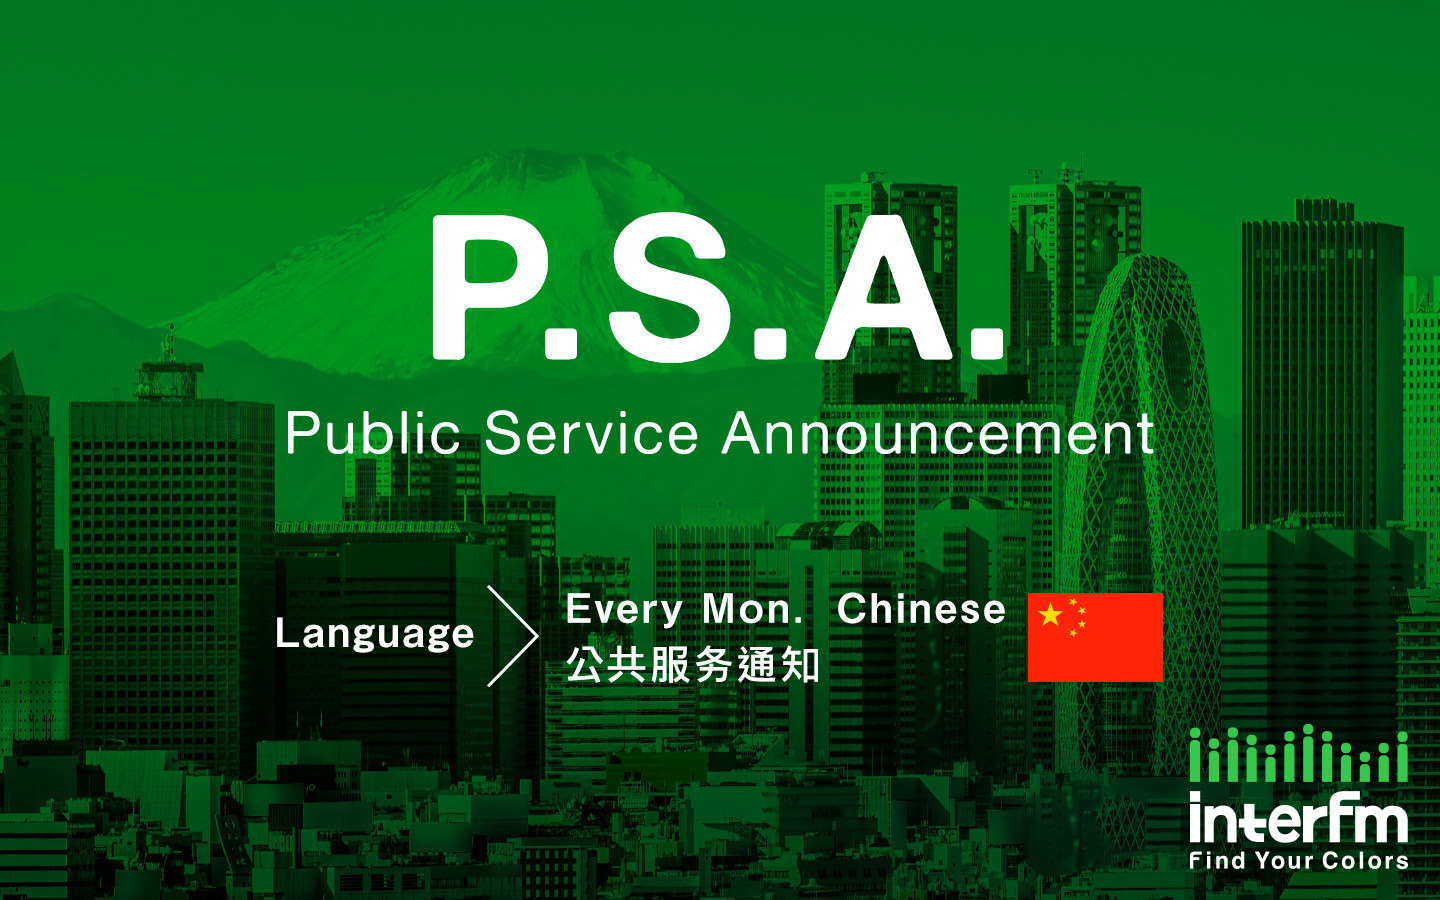 Public Service Announcement (中文 - Chinese)